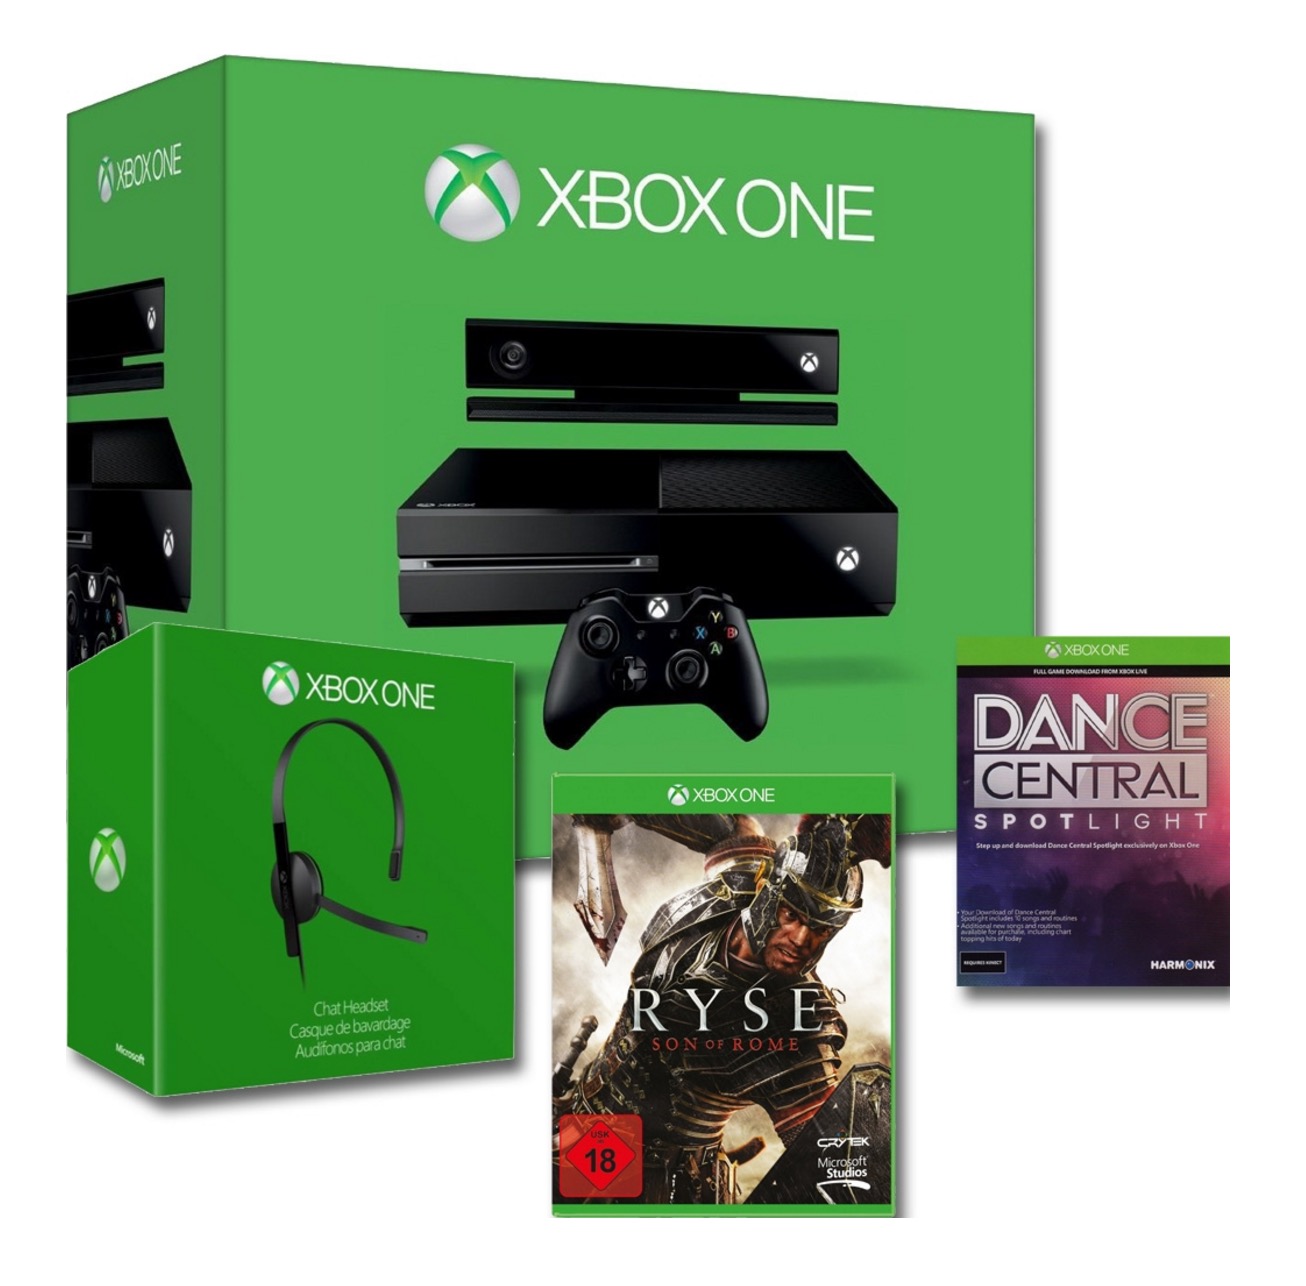 Microsoft Xbox One 500GB + Kinect + Ryse + Dance & Central + Headset “refurbished” nur 186,92 Euro inkl. Versand